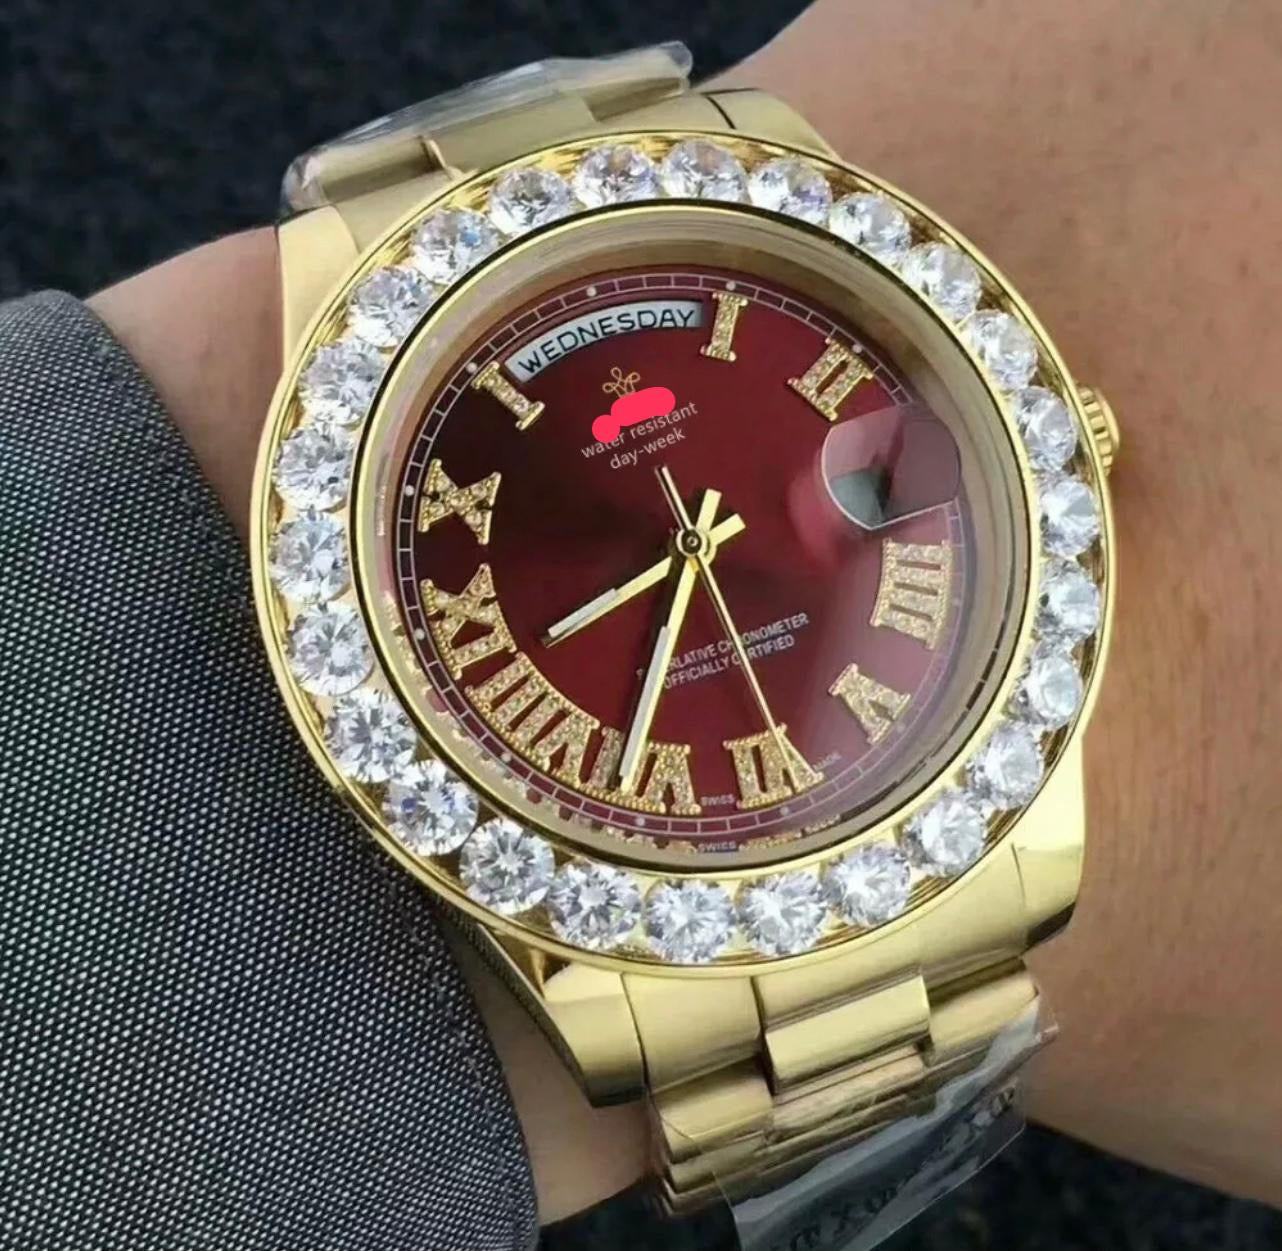 Beautiful watch